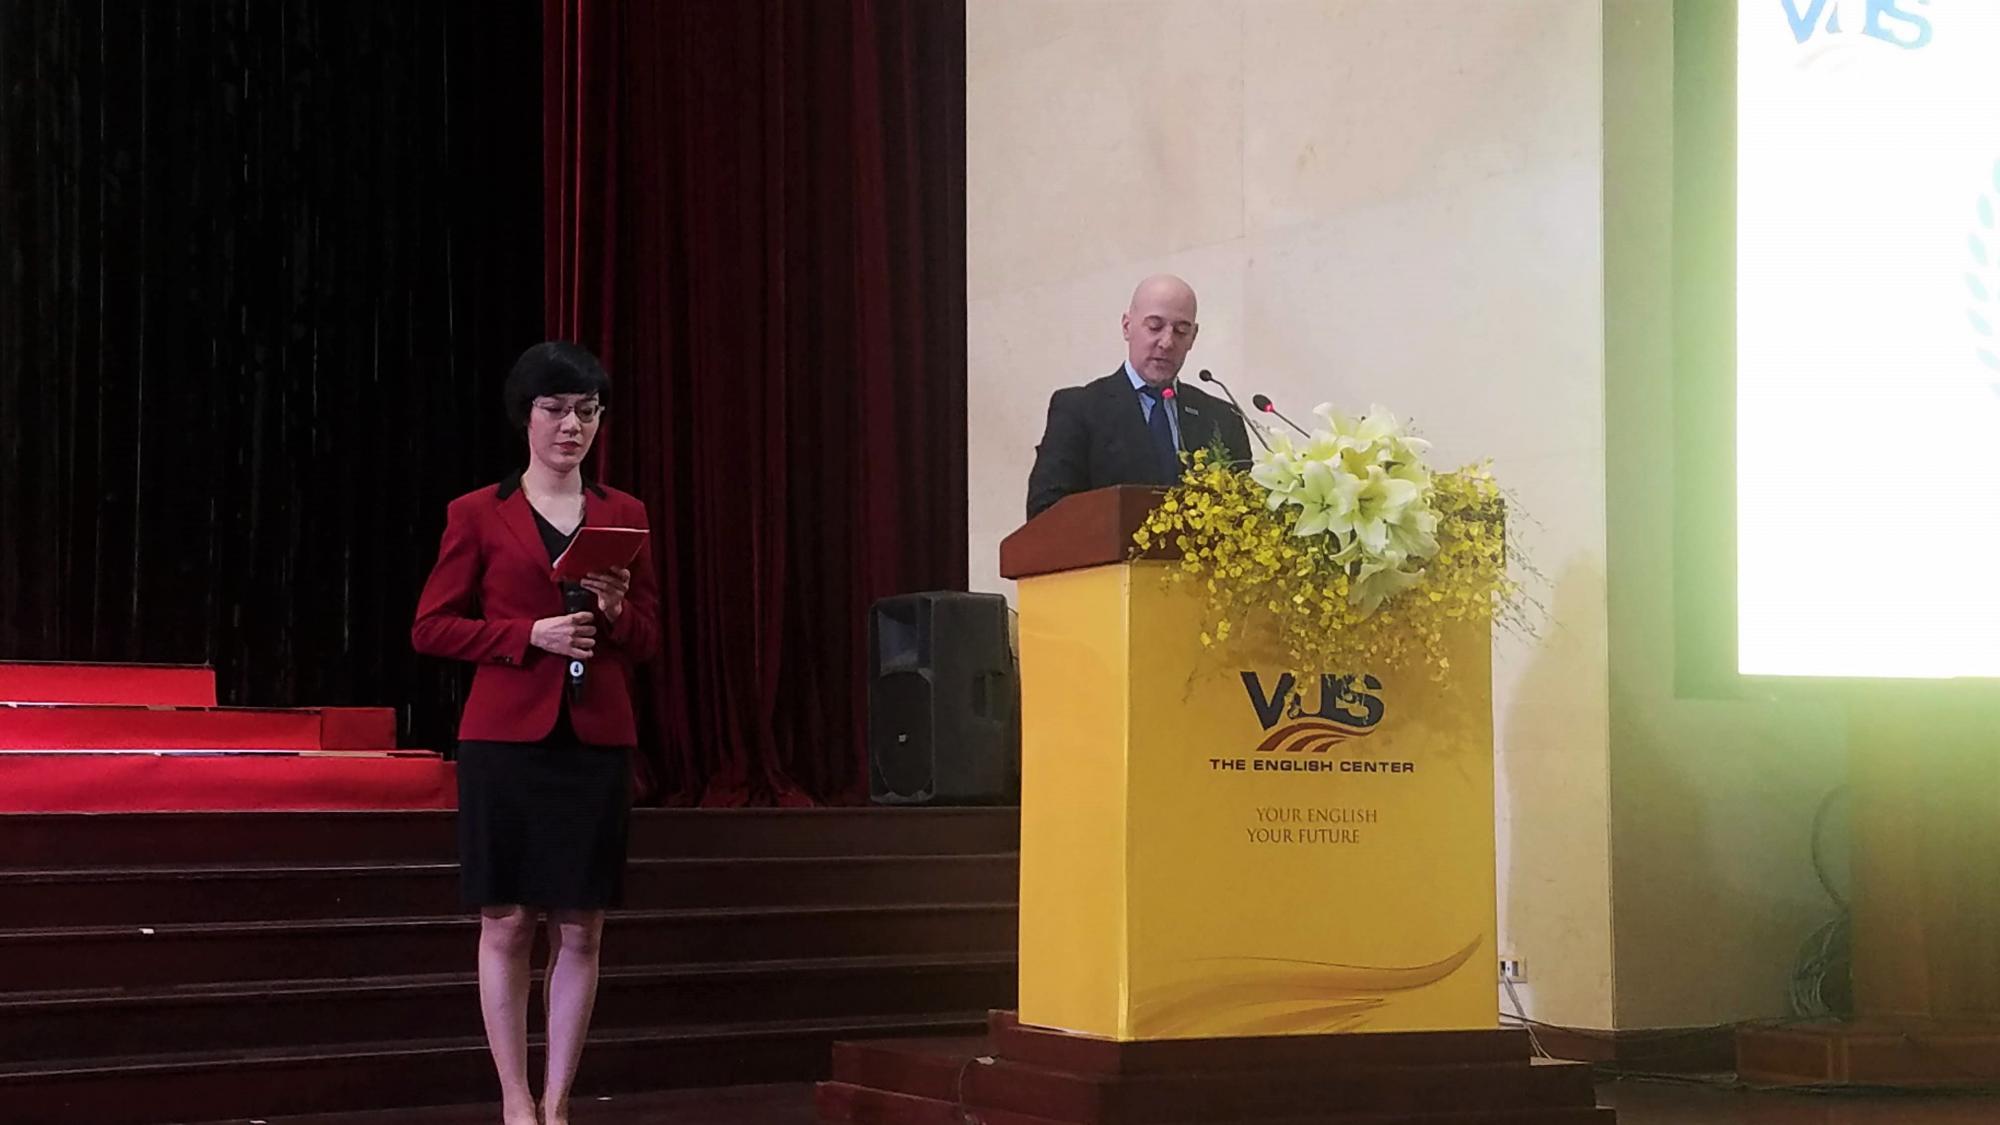 Executive Director giving a speech during VUS graduation event